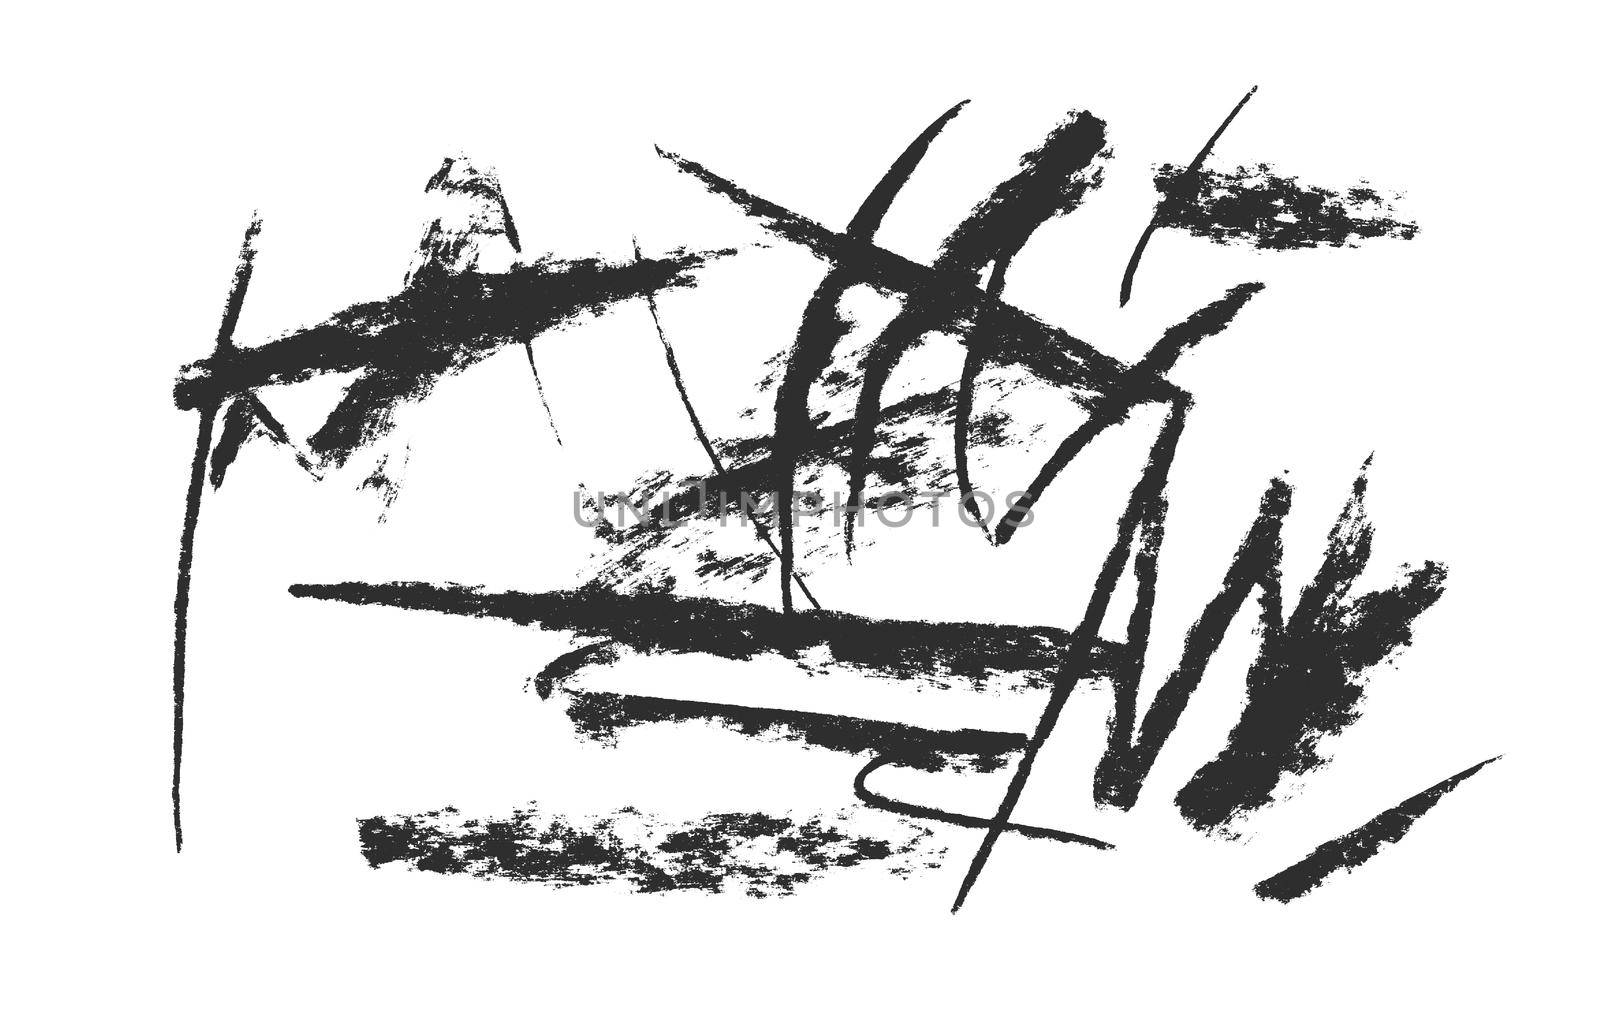 Pencil art abstract hand drawn sketch texture, natural dark grunge background illustration